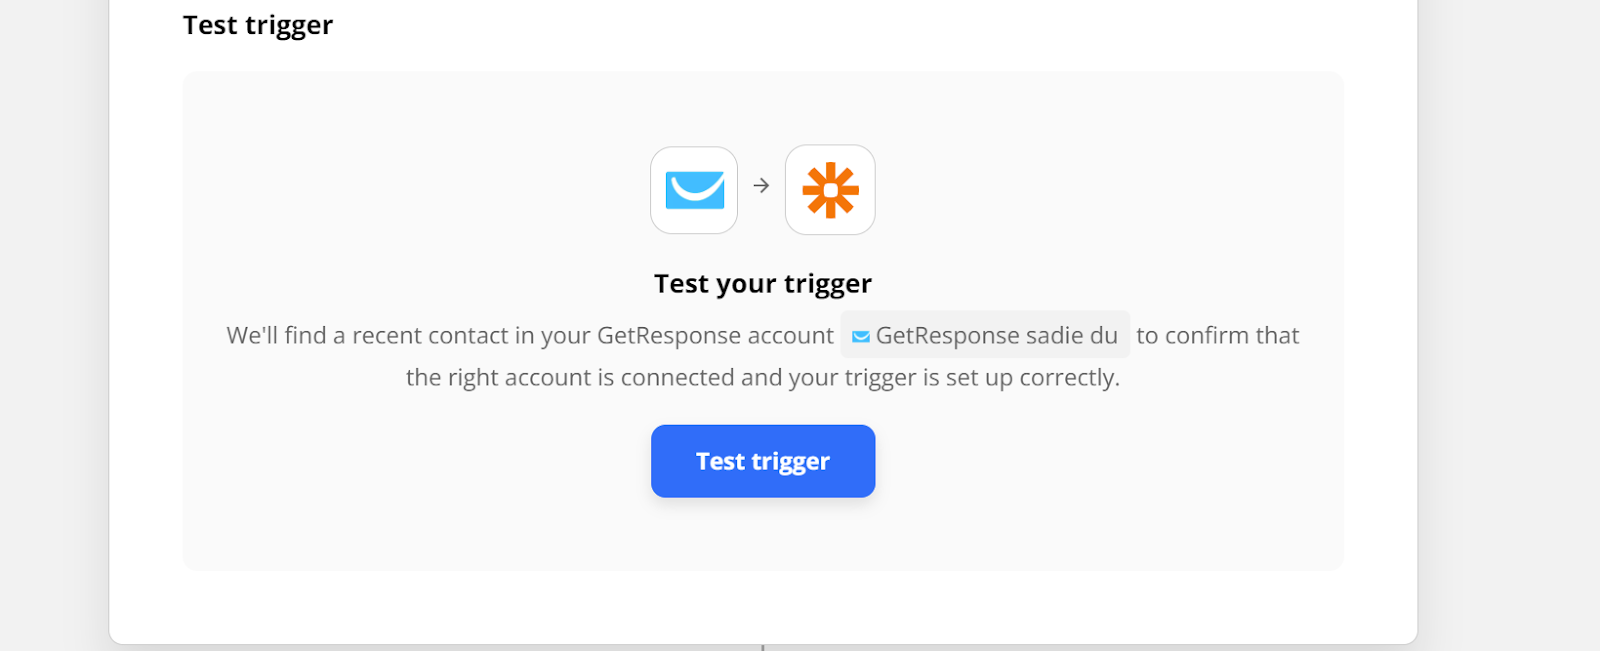 Trigger Campaign through GetResponse on Mailmodo